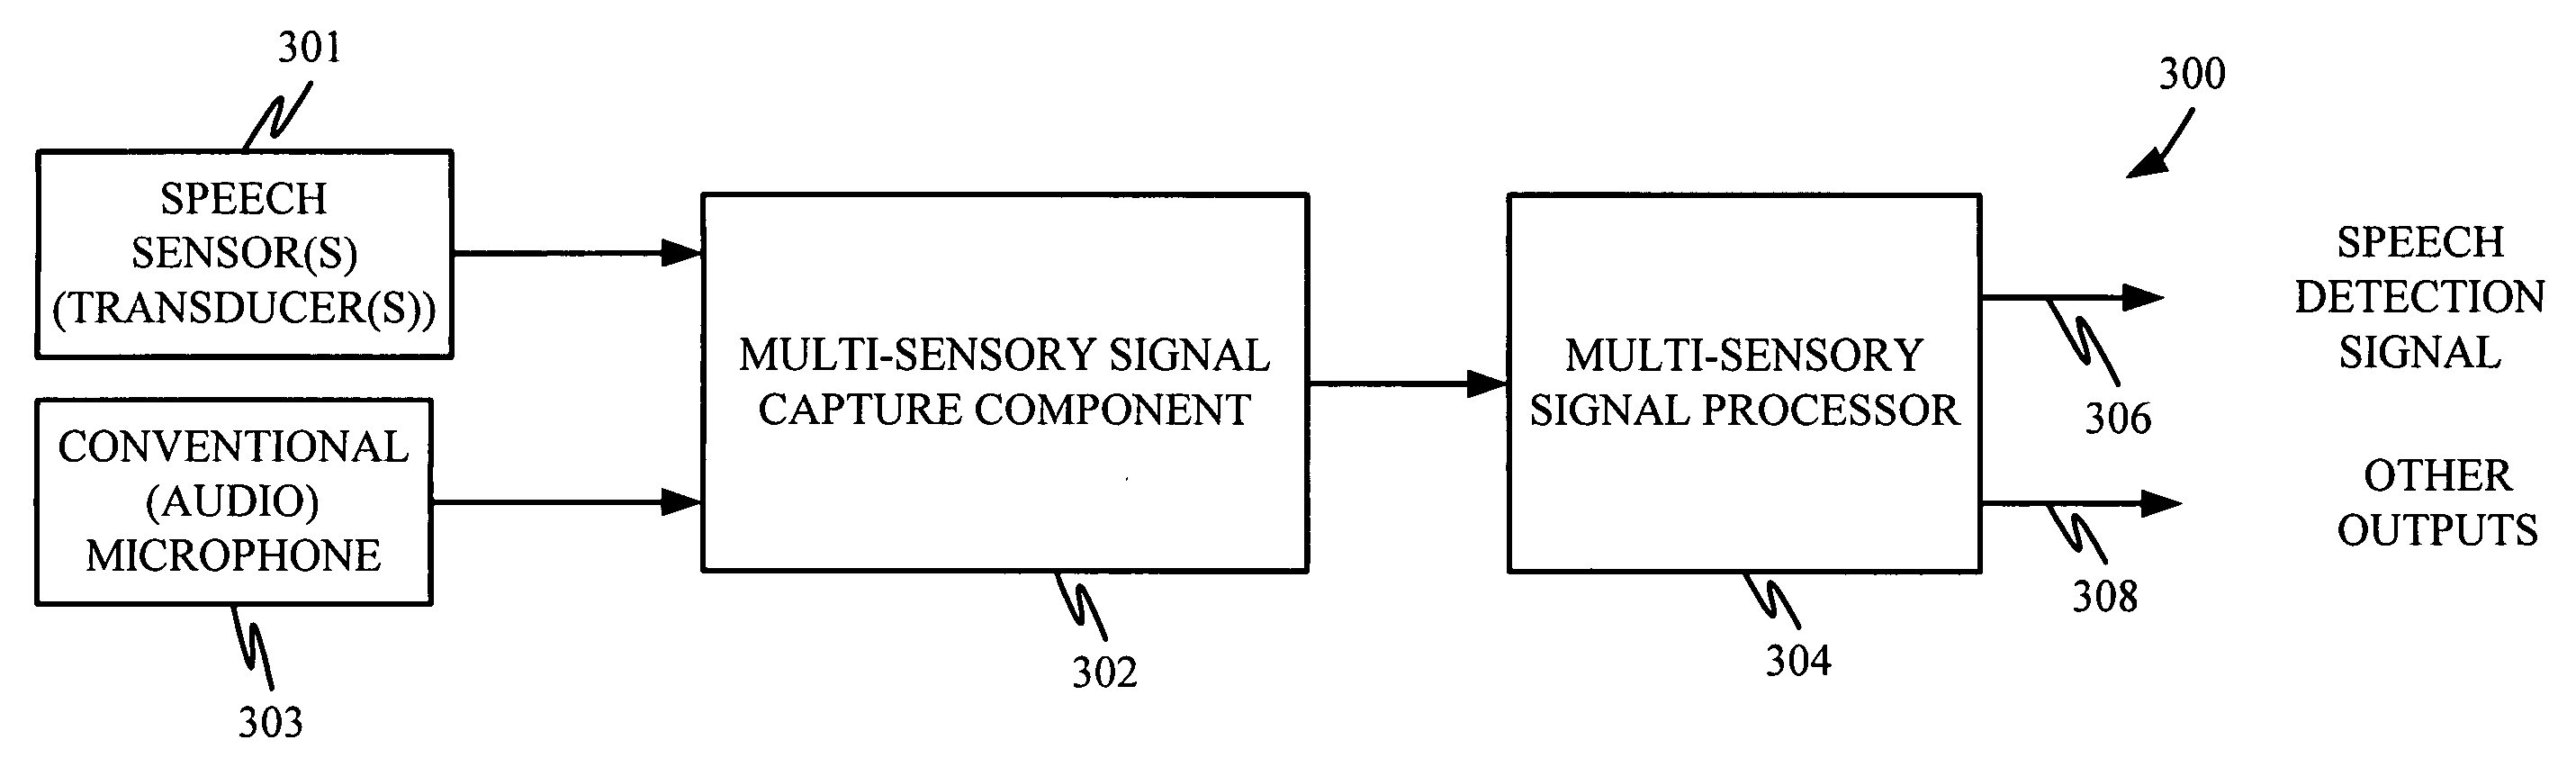 Head mounted multi-sensory audio input system